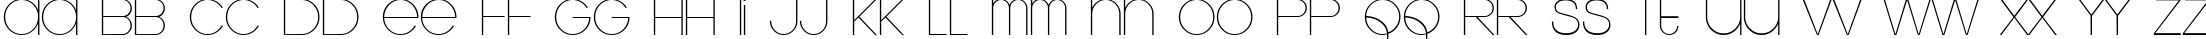 Пример написания английского алфавита шрифтом Kravitz